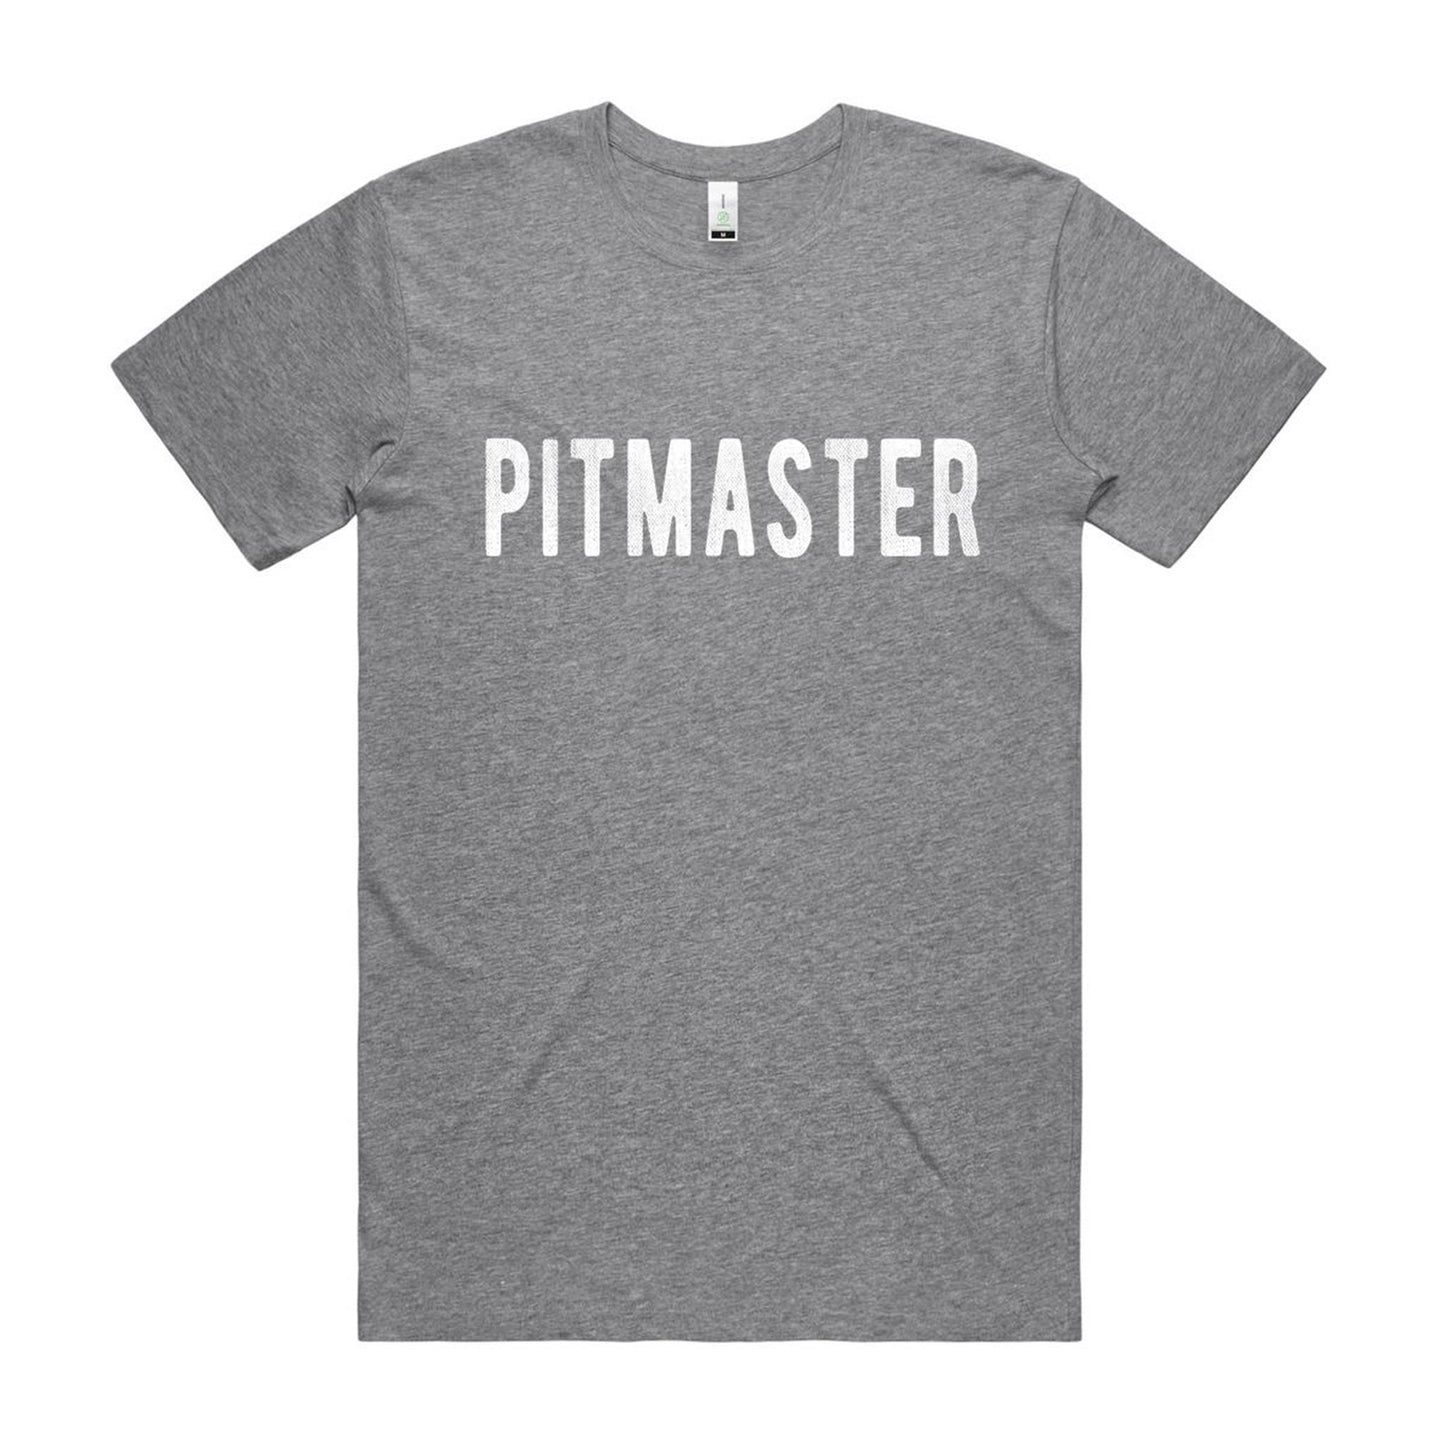 "Pitmaster" Adult T-Shirt